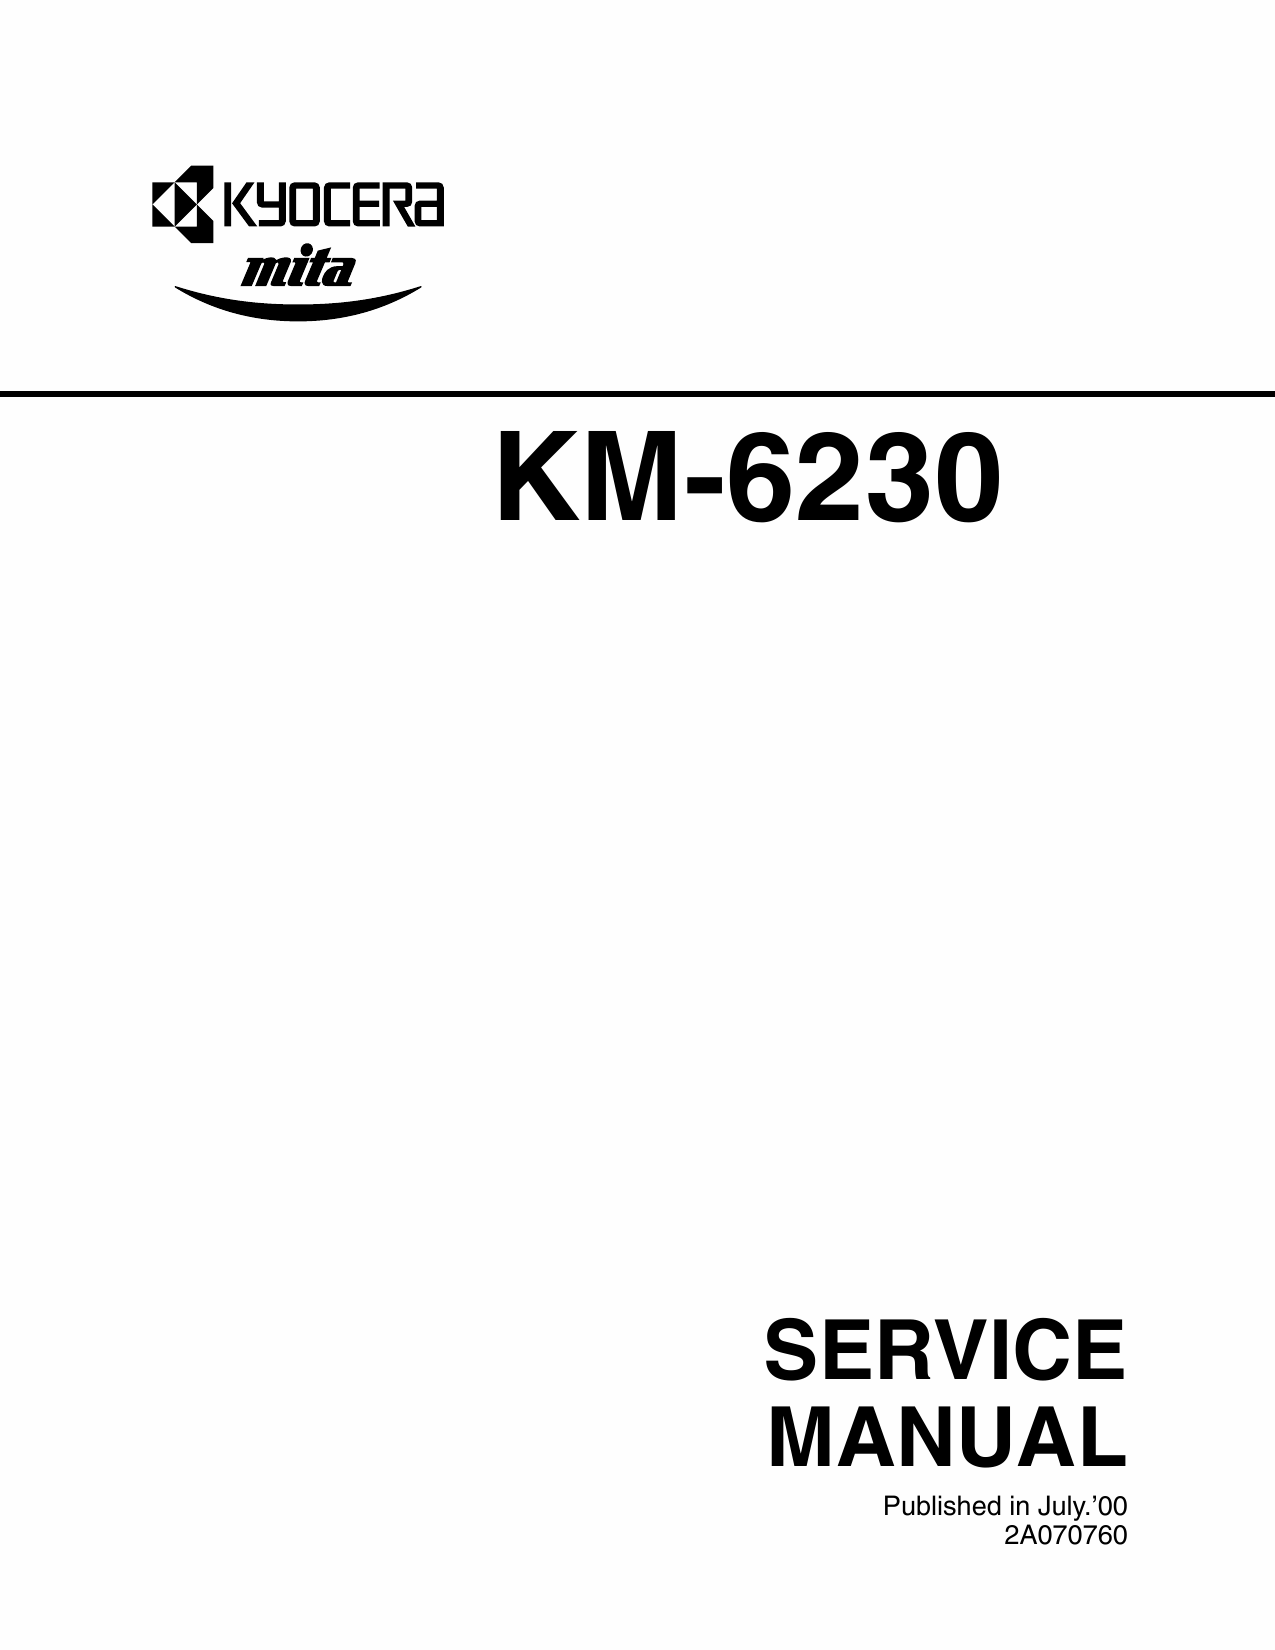 KYOCERA Copier KM-6230 Parts and Service Manual-1